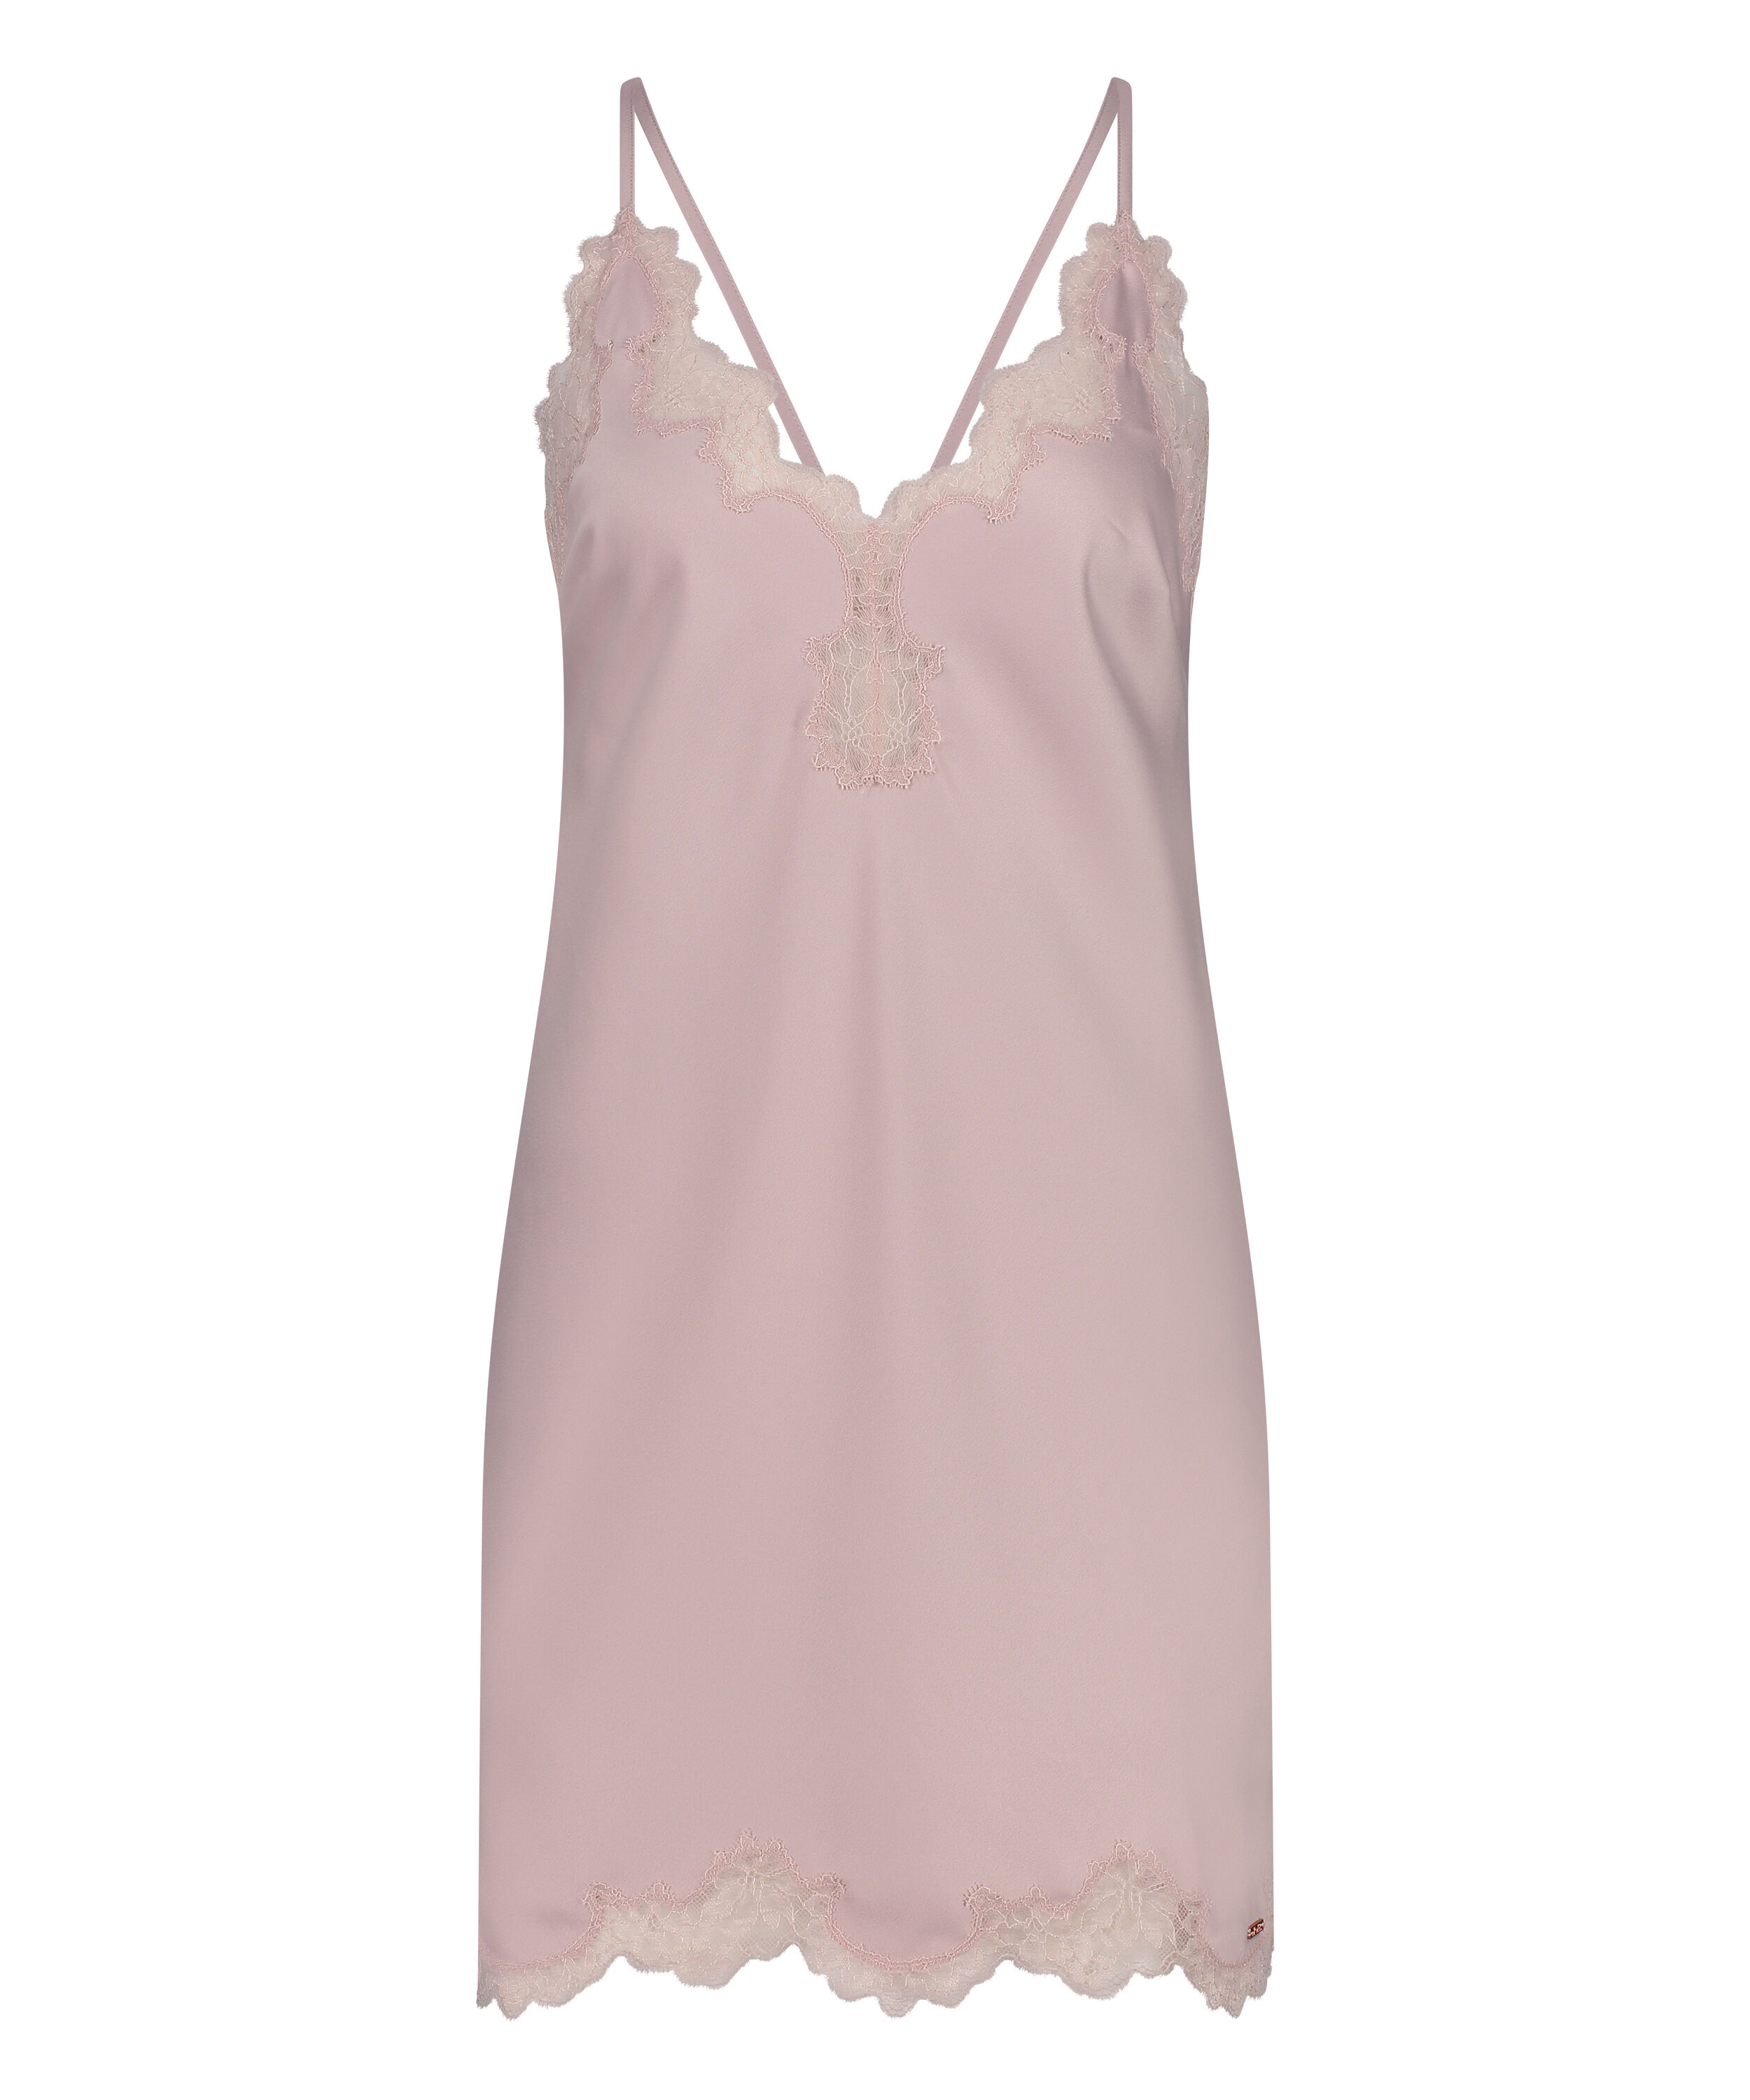 Lace Satin Slip Dress for €46.99 - Slip dresses & Babydolls